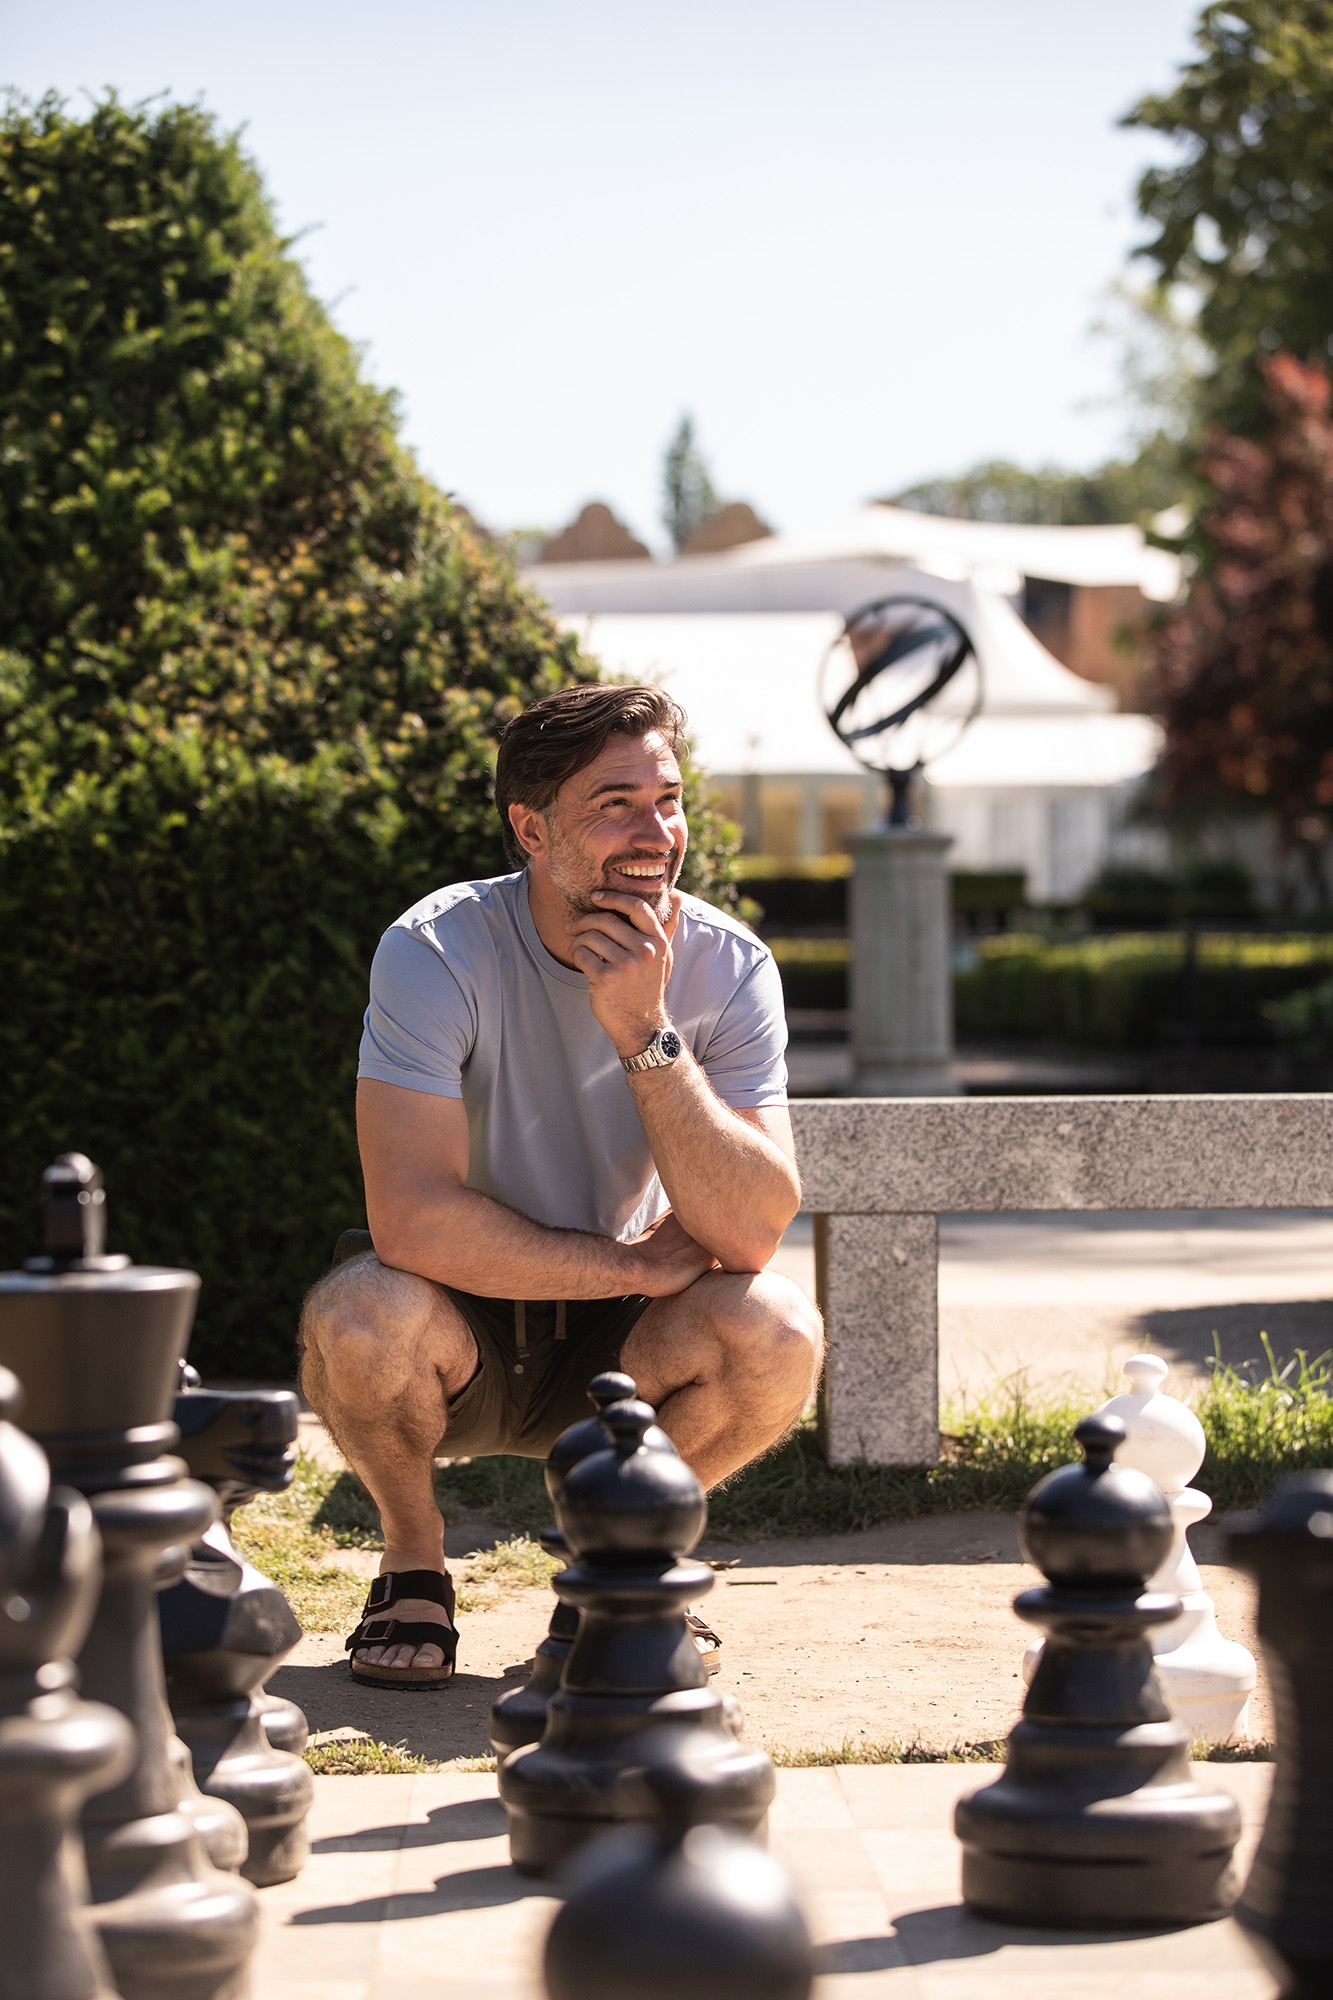 Man crouching next to outdoor chess set